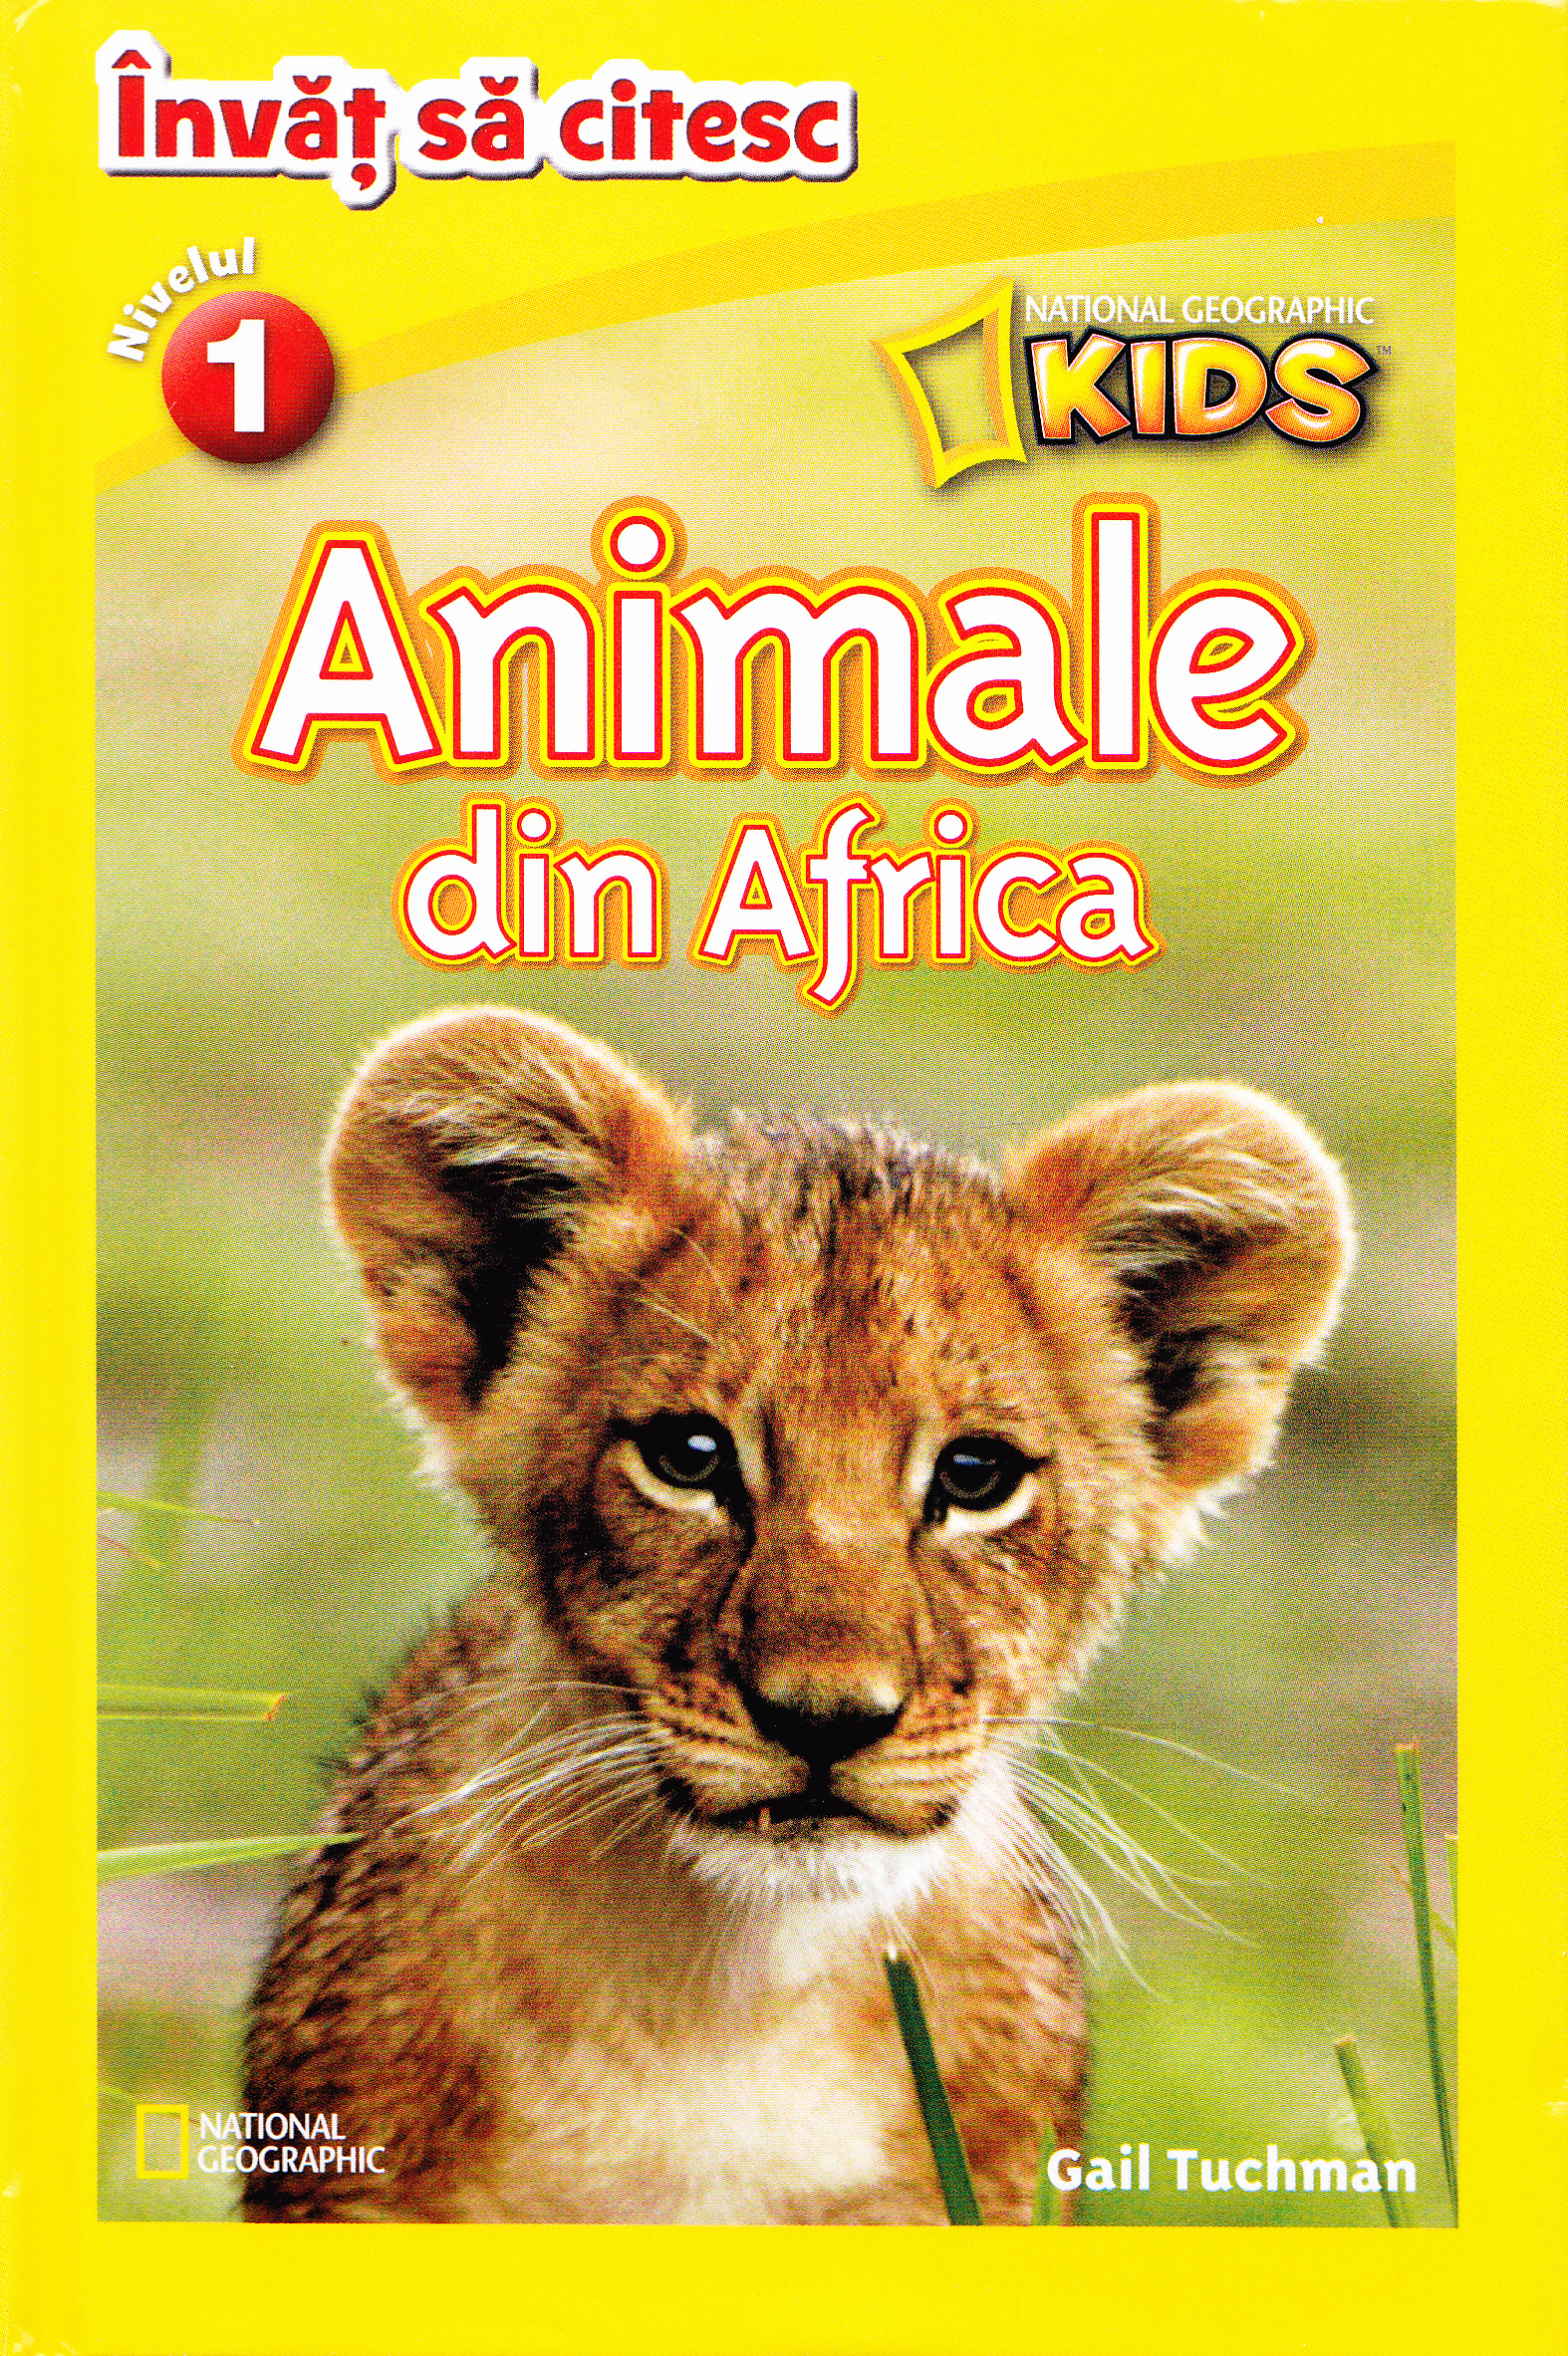 Animale din Africa - National Geographic Kids - Invat sa citesc nivelul 1